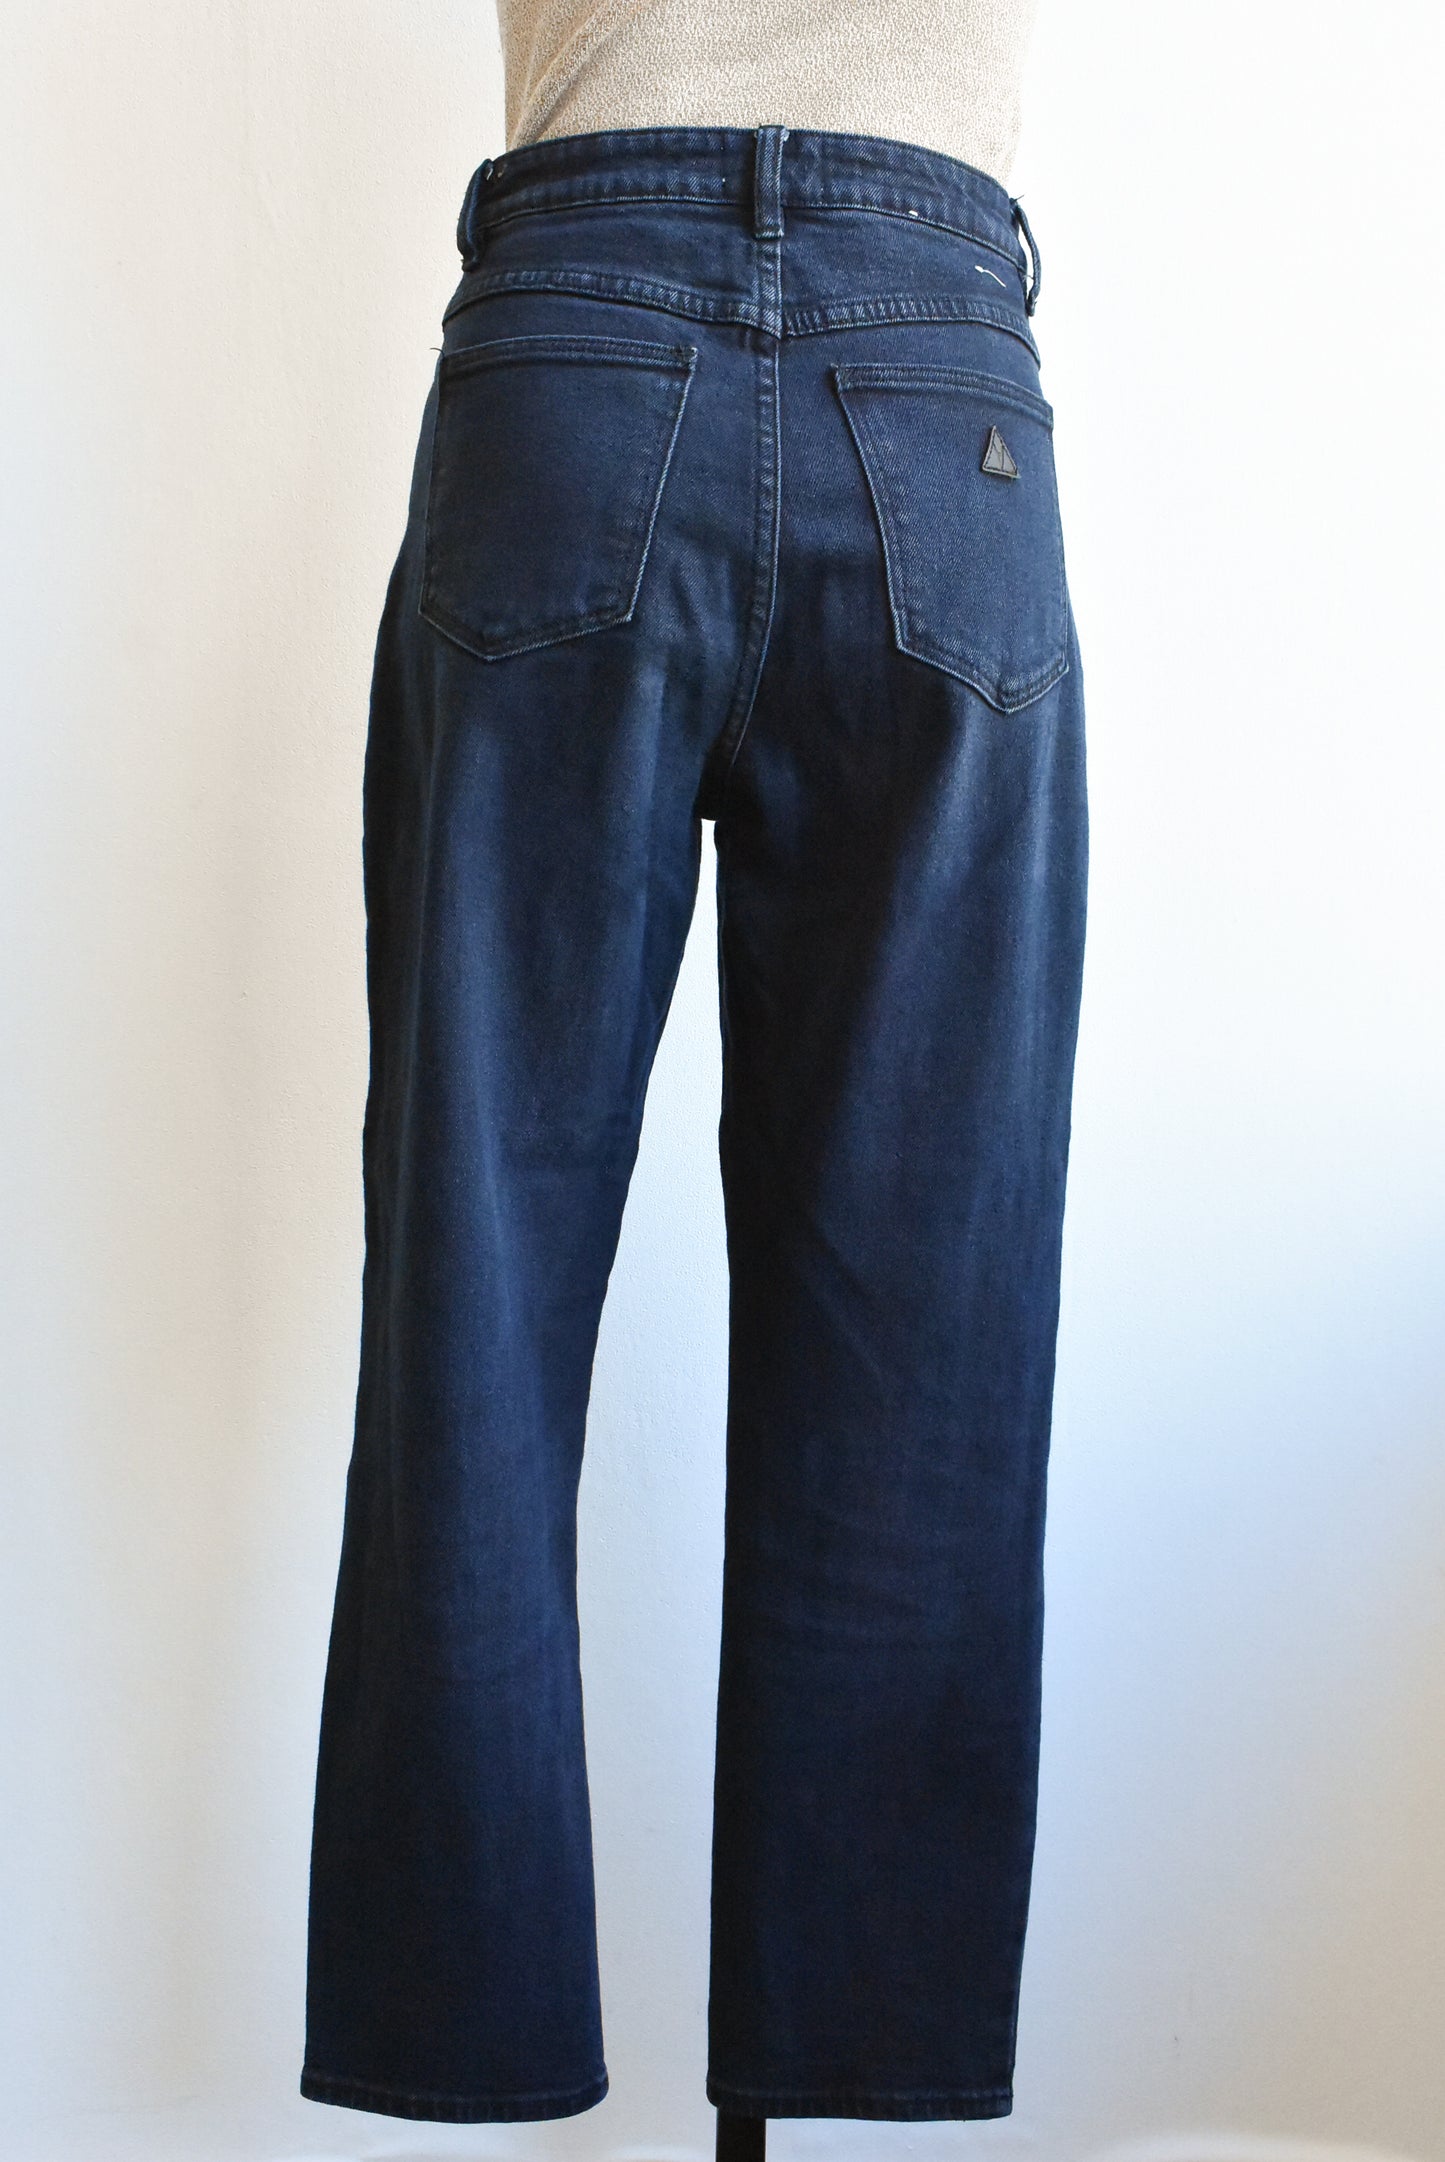 Abrand Jeans dark blue high rise jeans, S